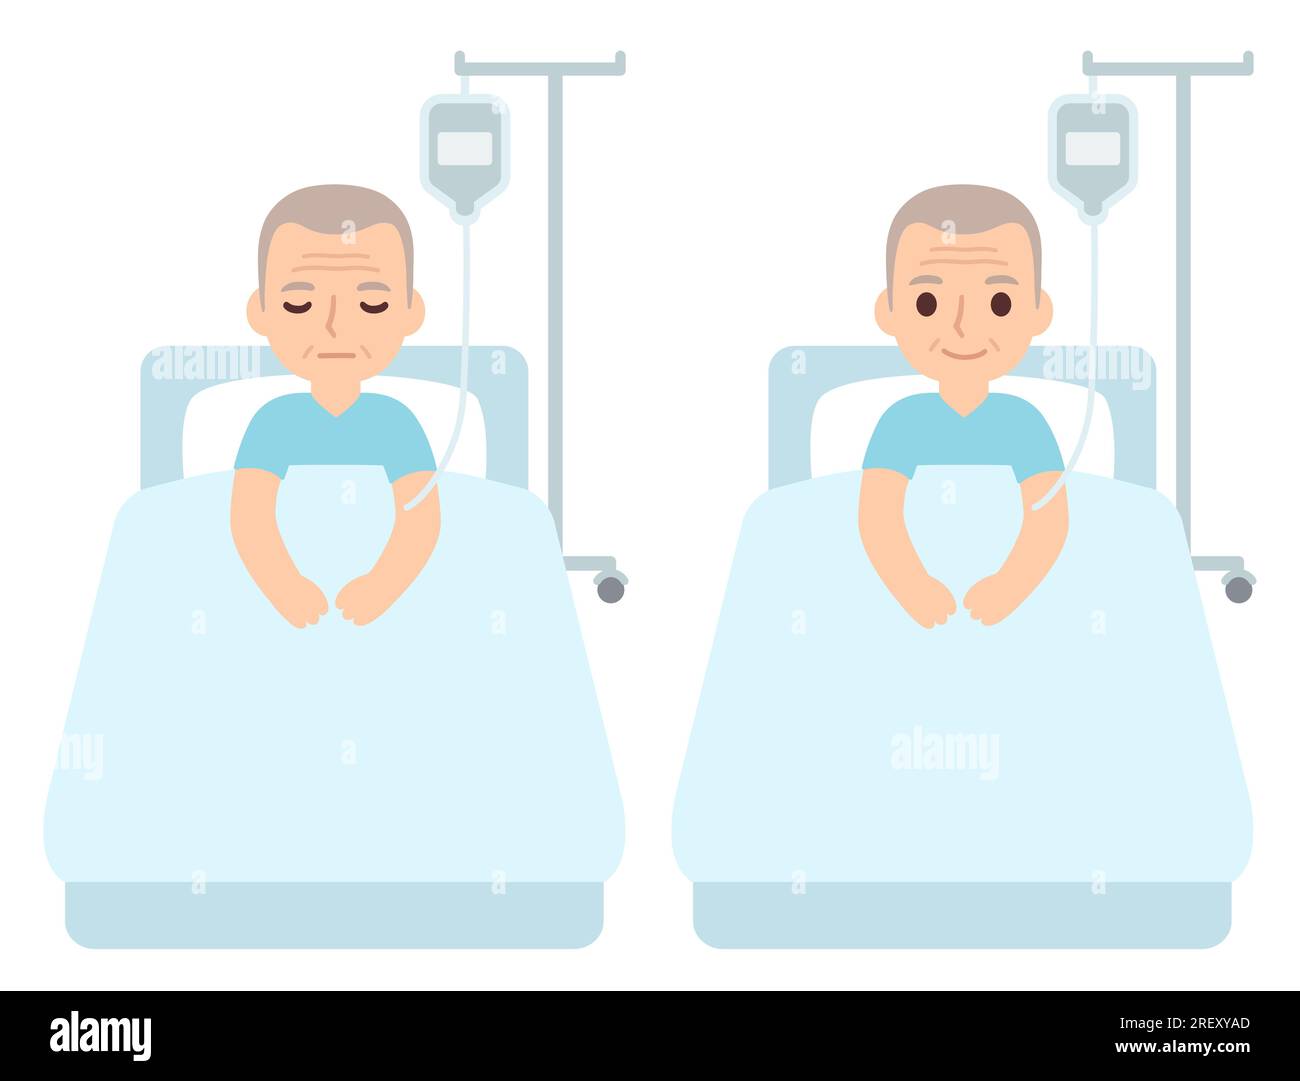 Senior man in hospital bed receiving IV drip treatment. Cute cartoon illustration in flat vector style. Stock Vector